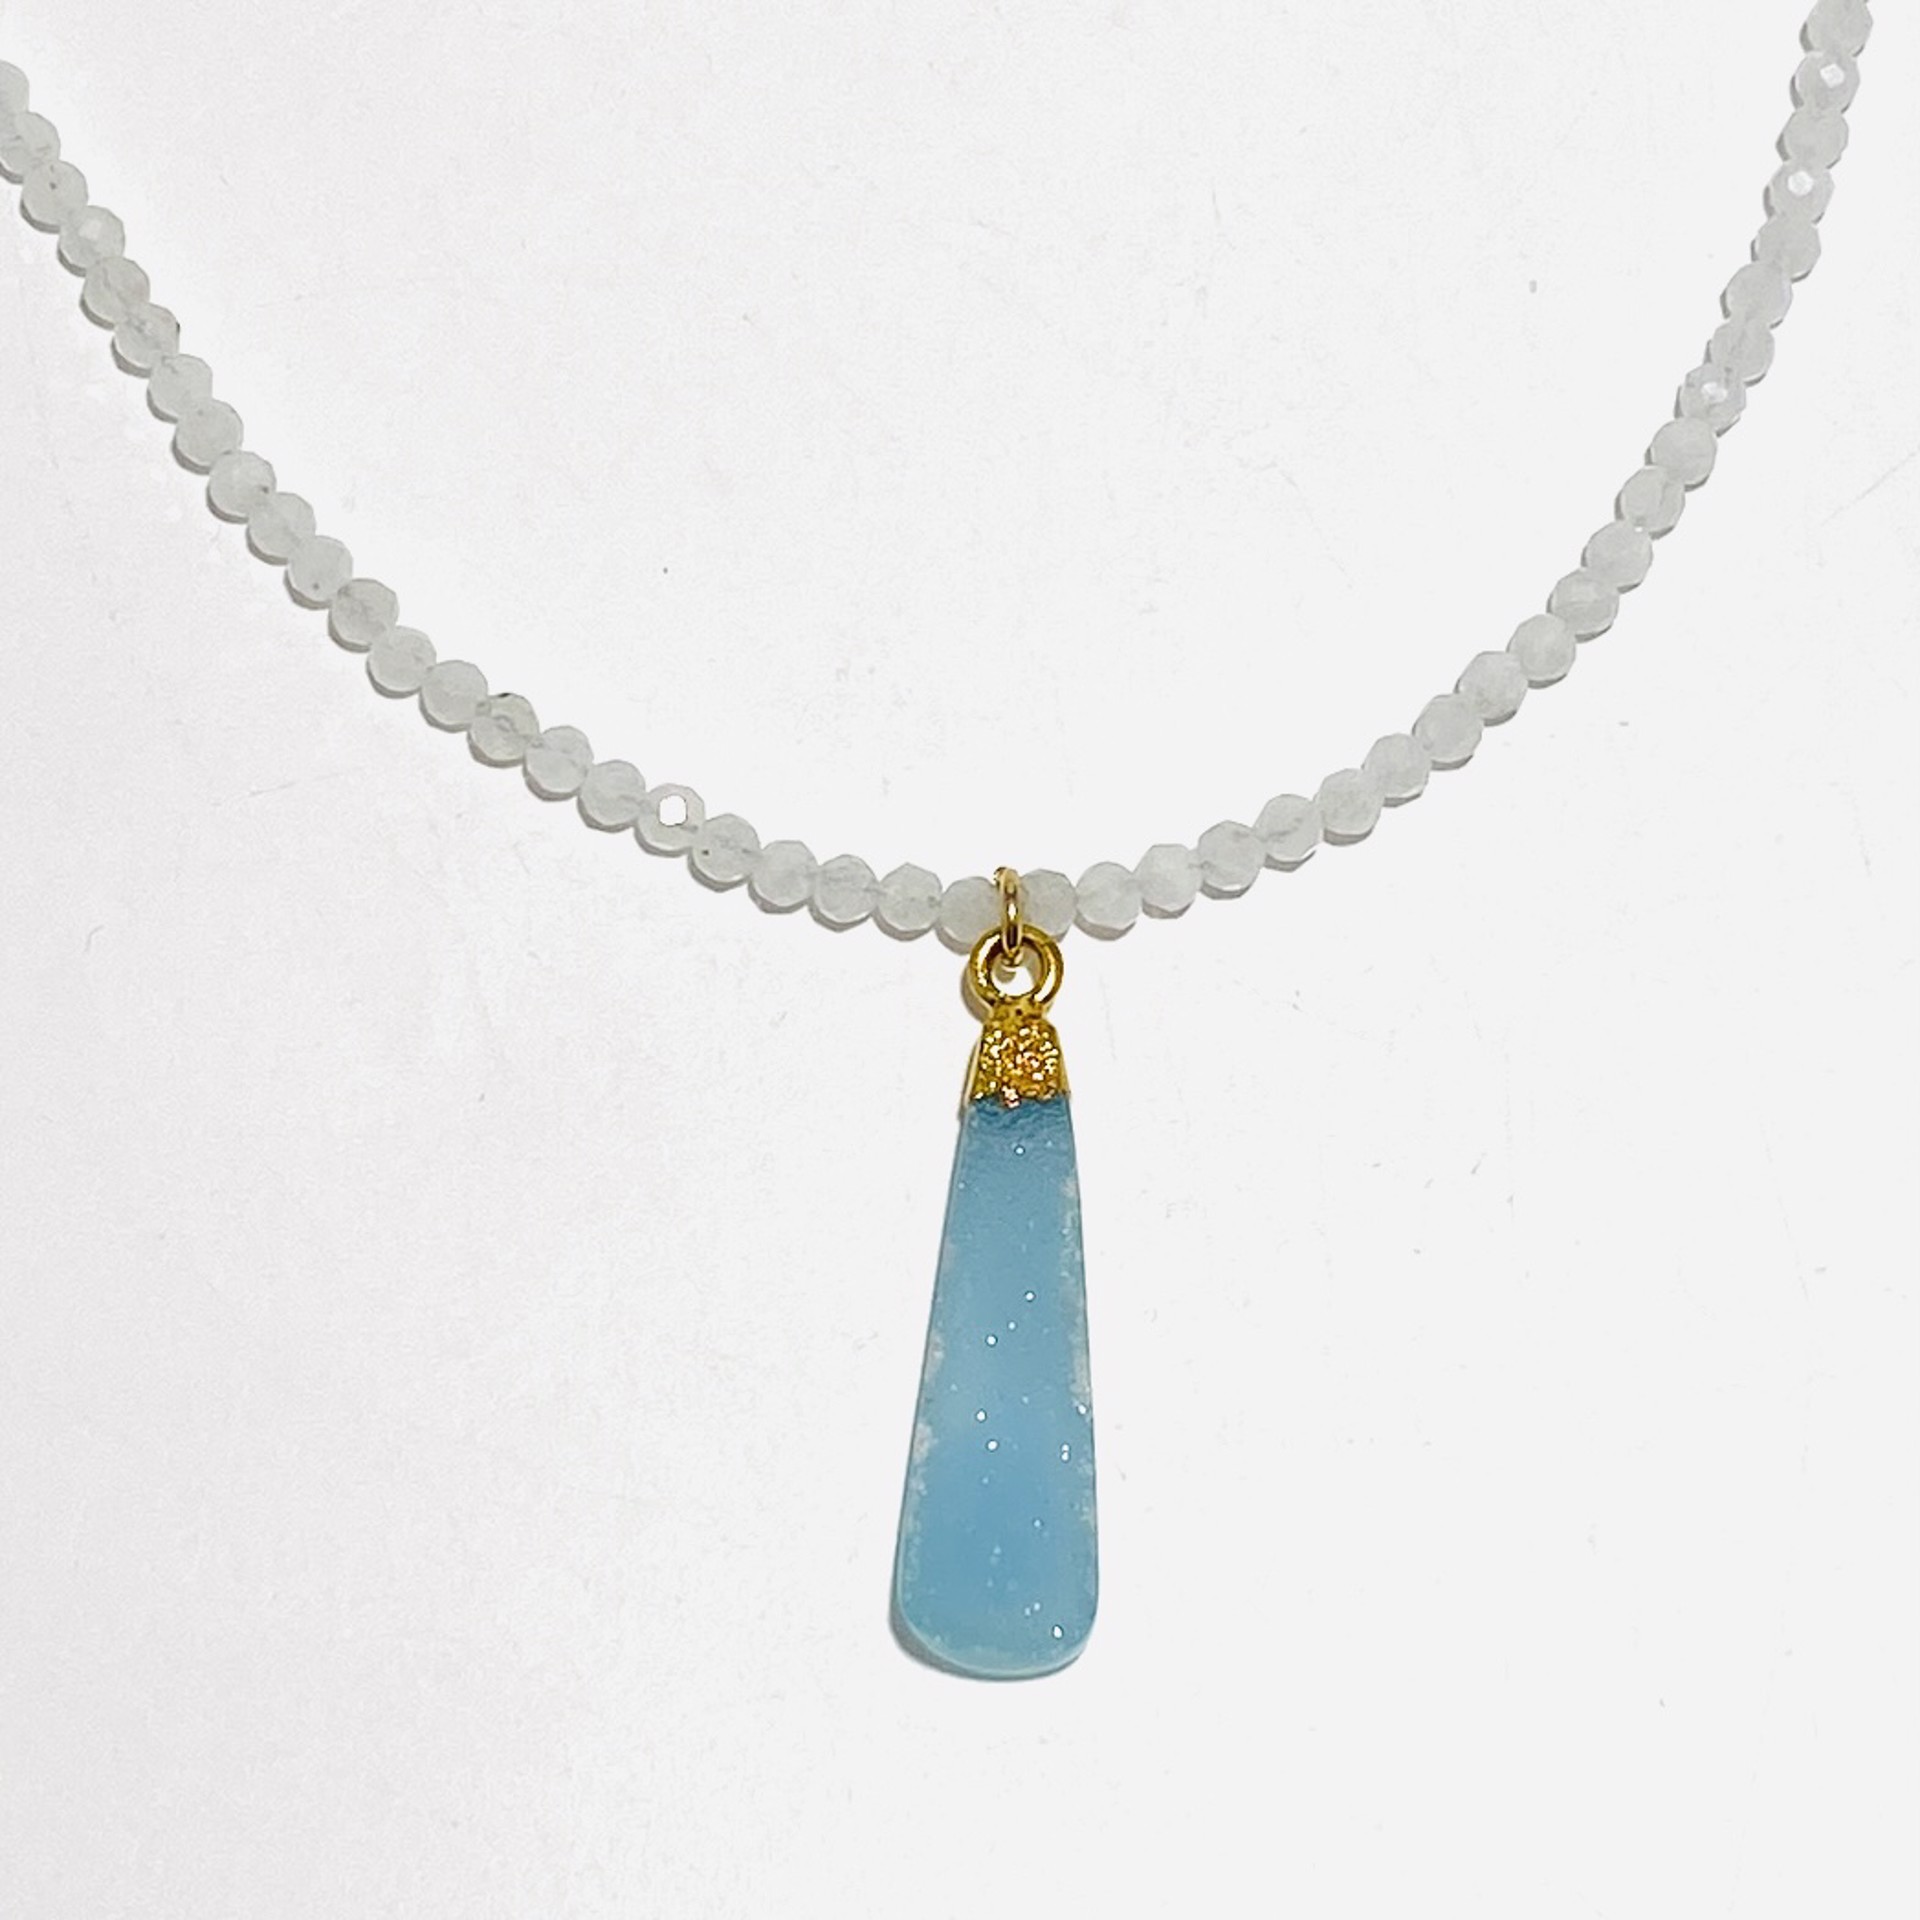 Tiny Moonstone Sky Blue Druzy Pendant Necklace by Nance Trueworthy